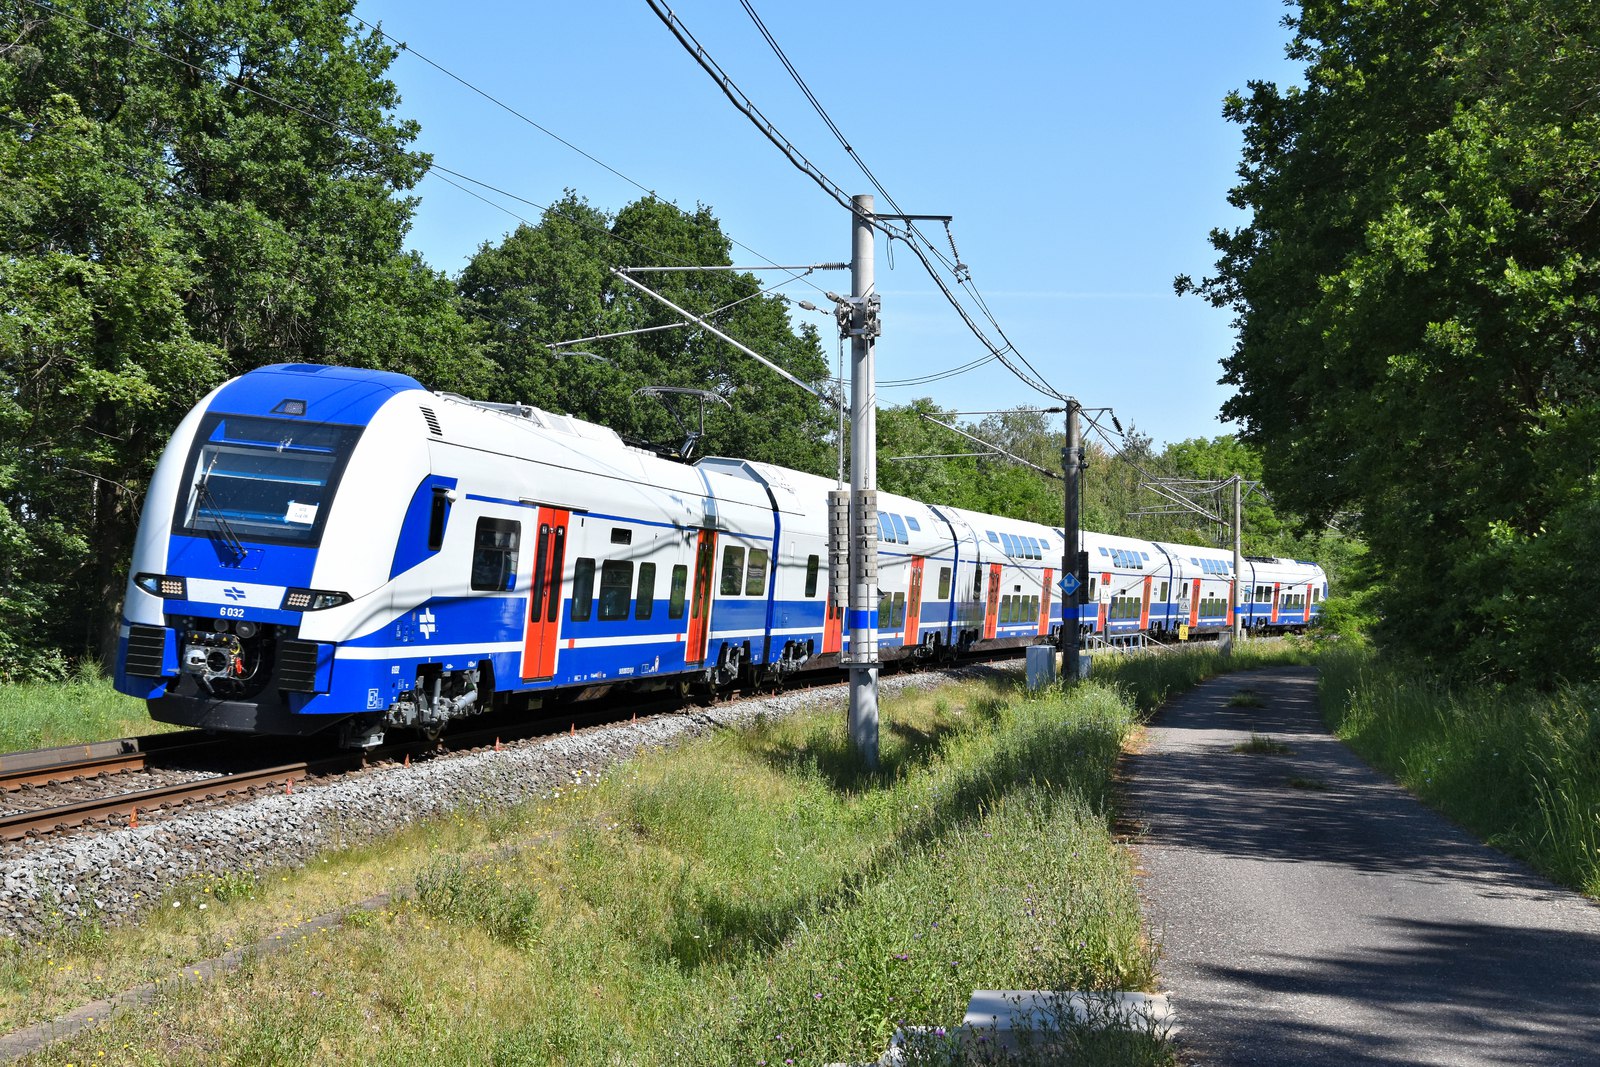 The Desiro HC for Israel Railways at the Siemens test and validation centre in Wegberg-Wildenrath